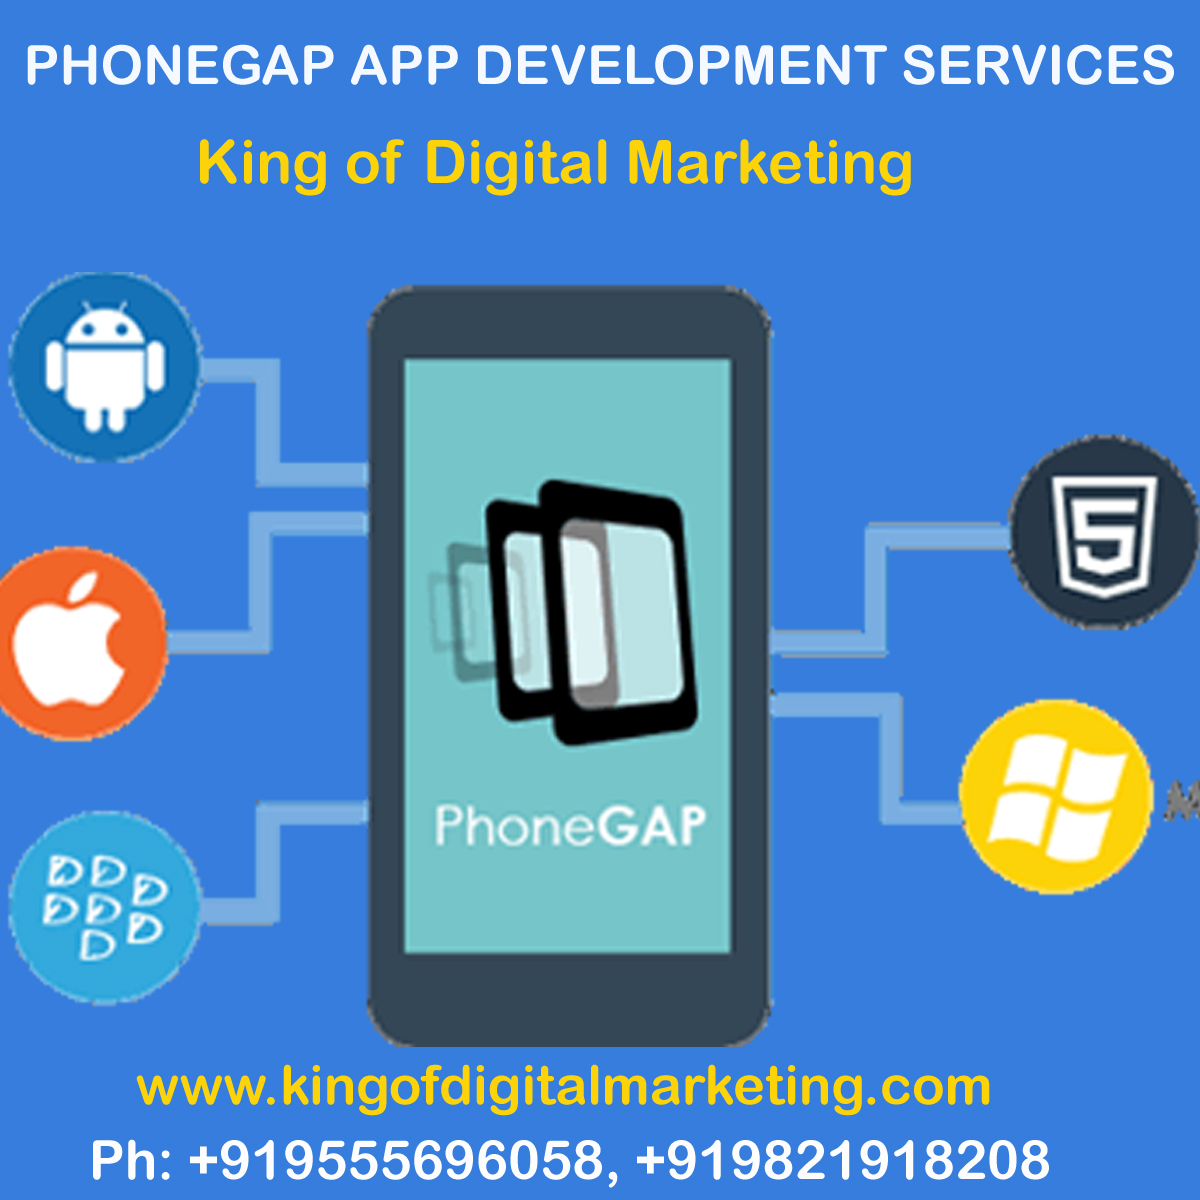 PhoneGap Mobile App Development Services Company in Delhi